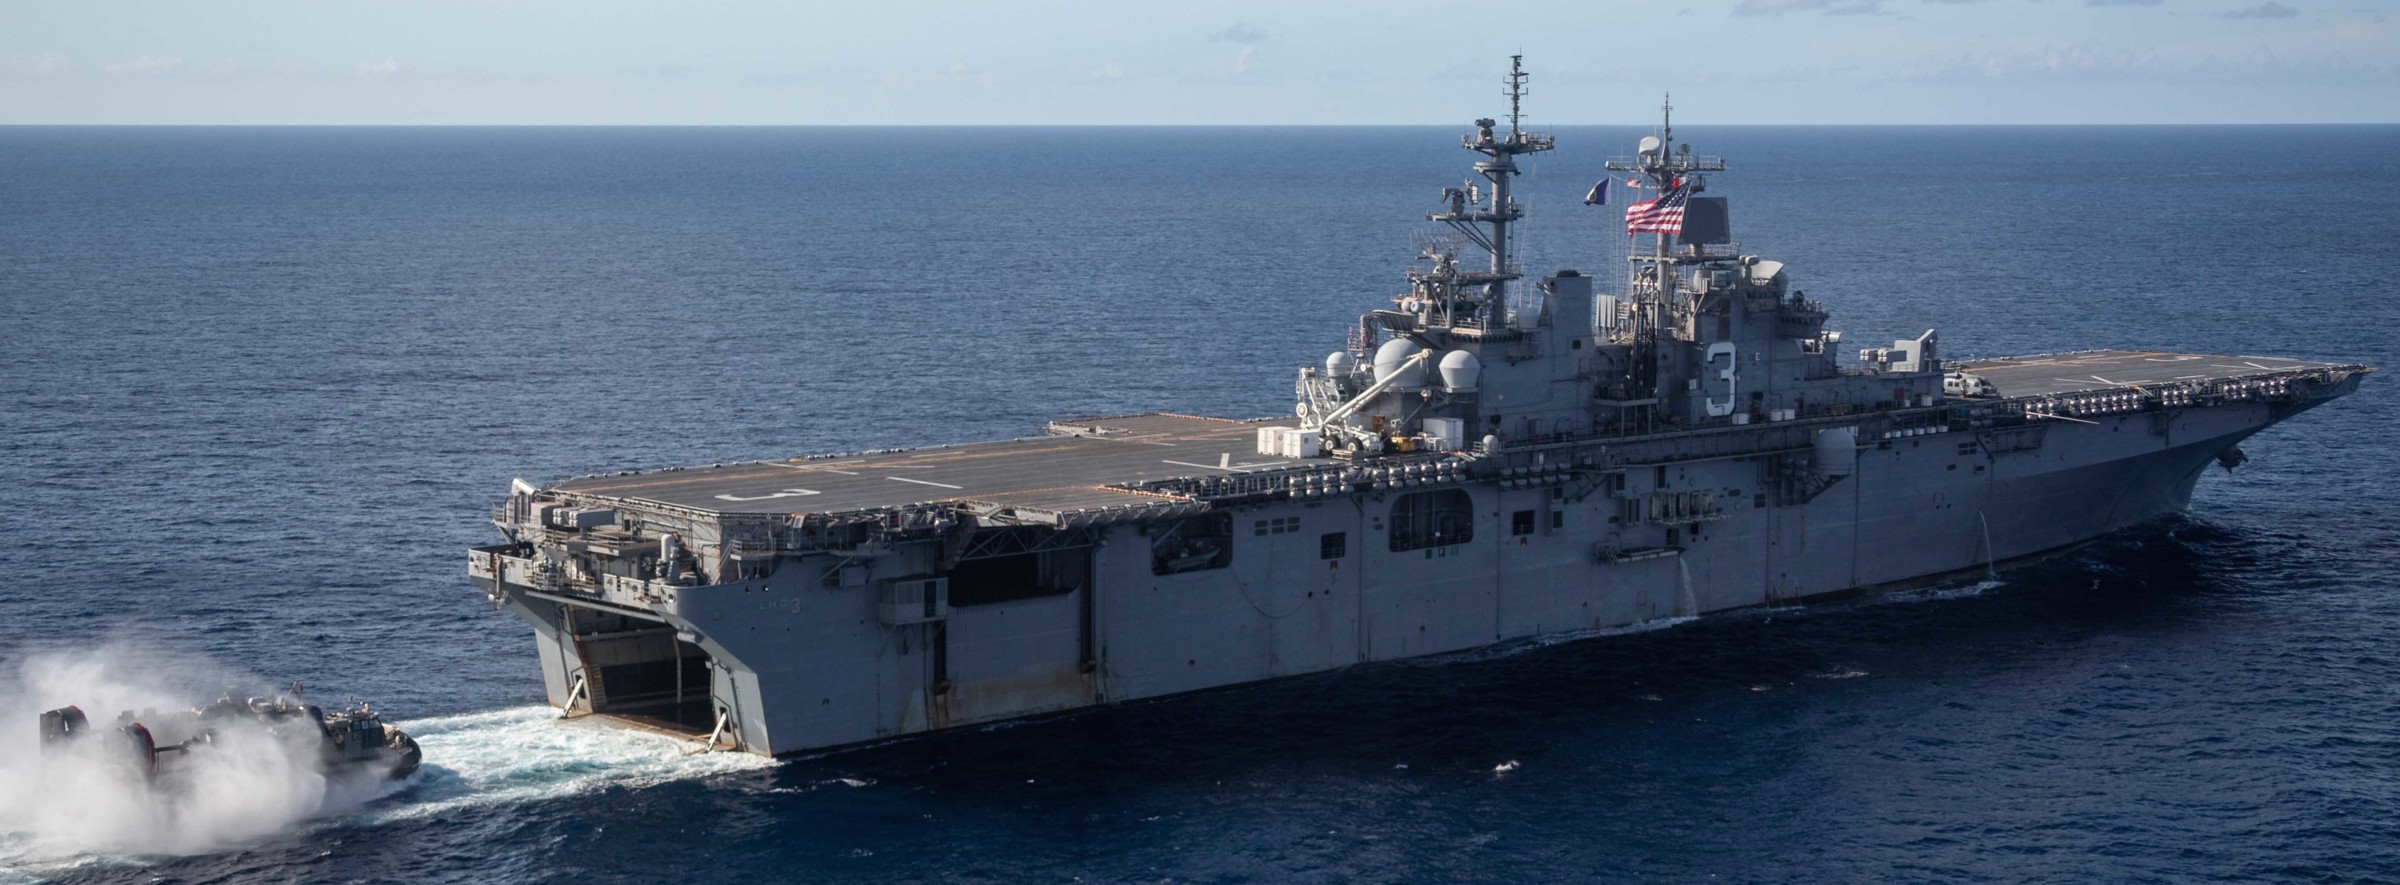 lhd-3 uss kearsarge wasp class amphibious assault ship landing dock us navy marines lcac operations 216